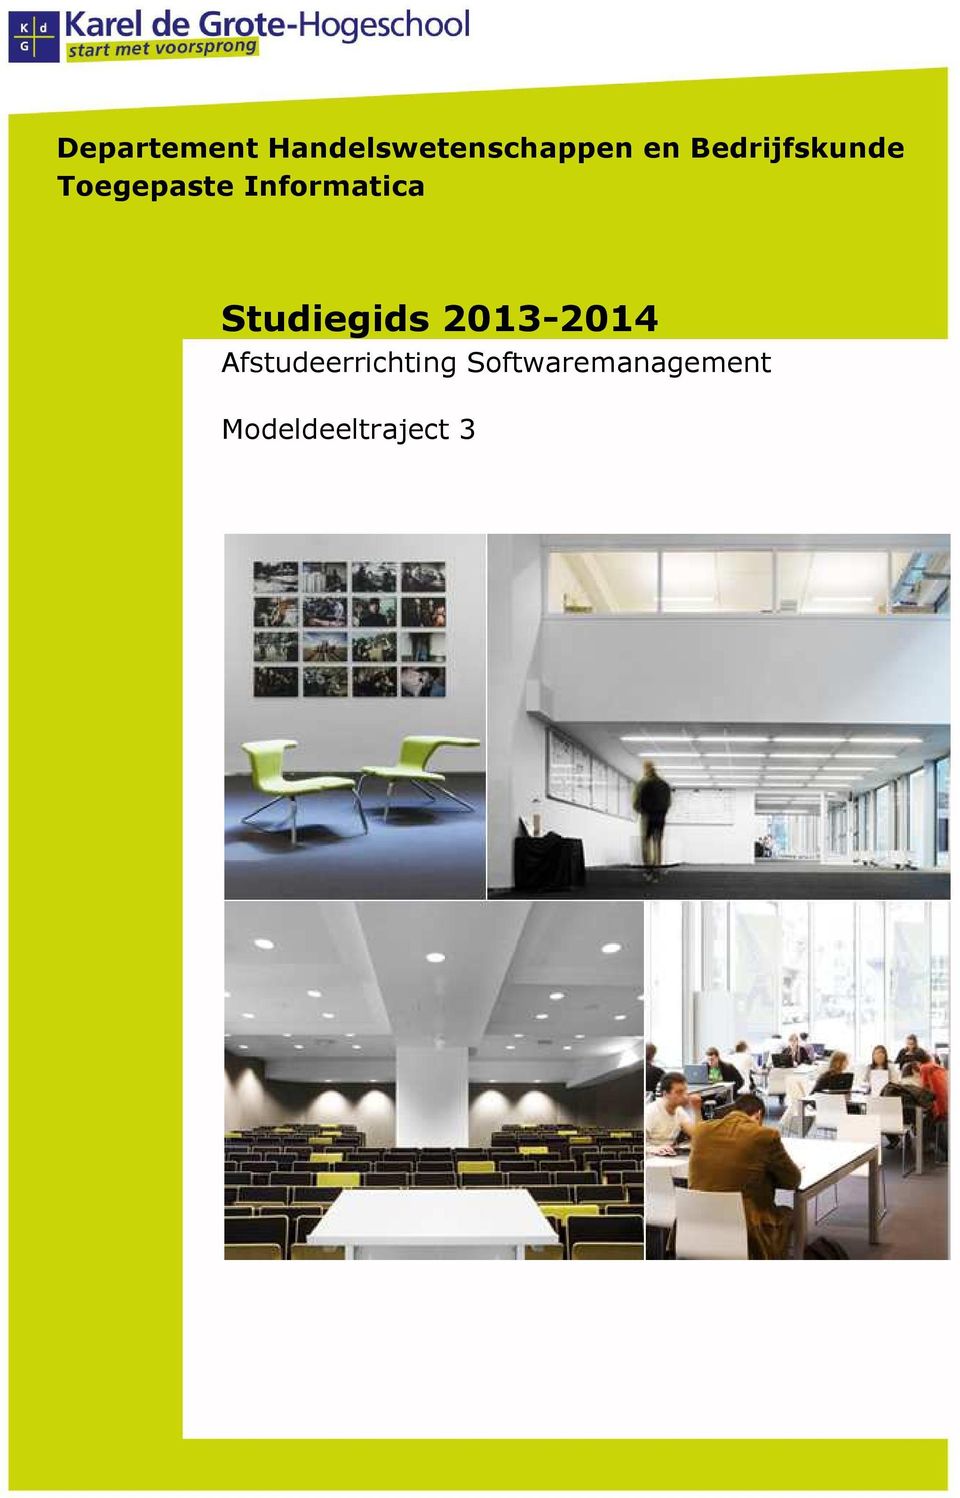 Studiegids 2013-2014